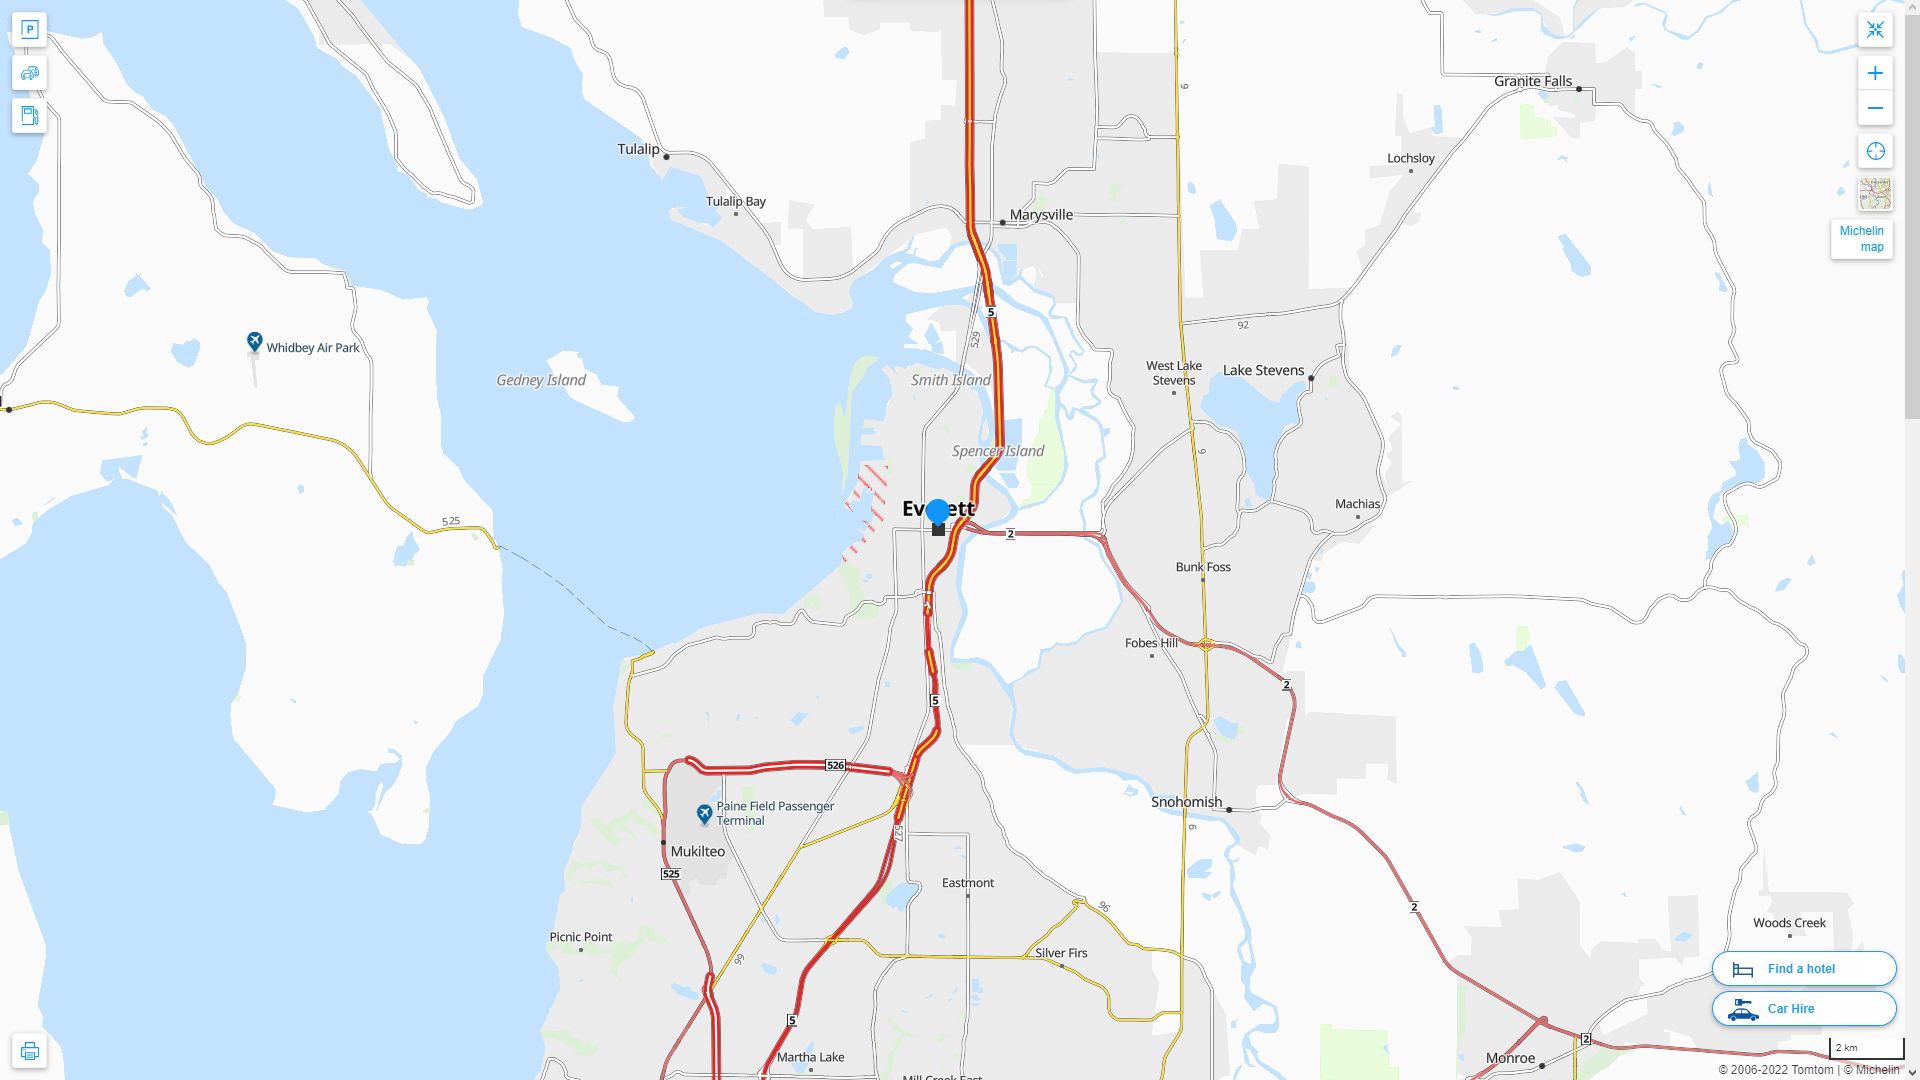 Everett Washington Highway and Road Map